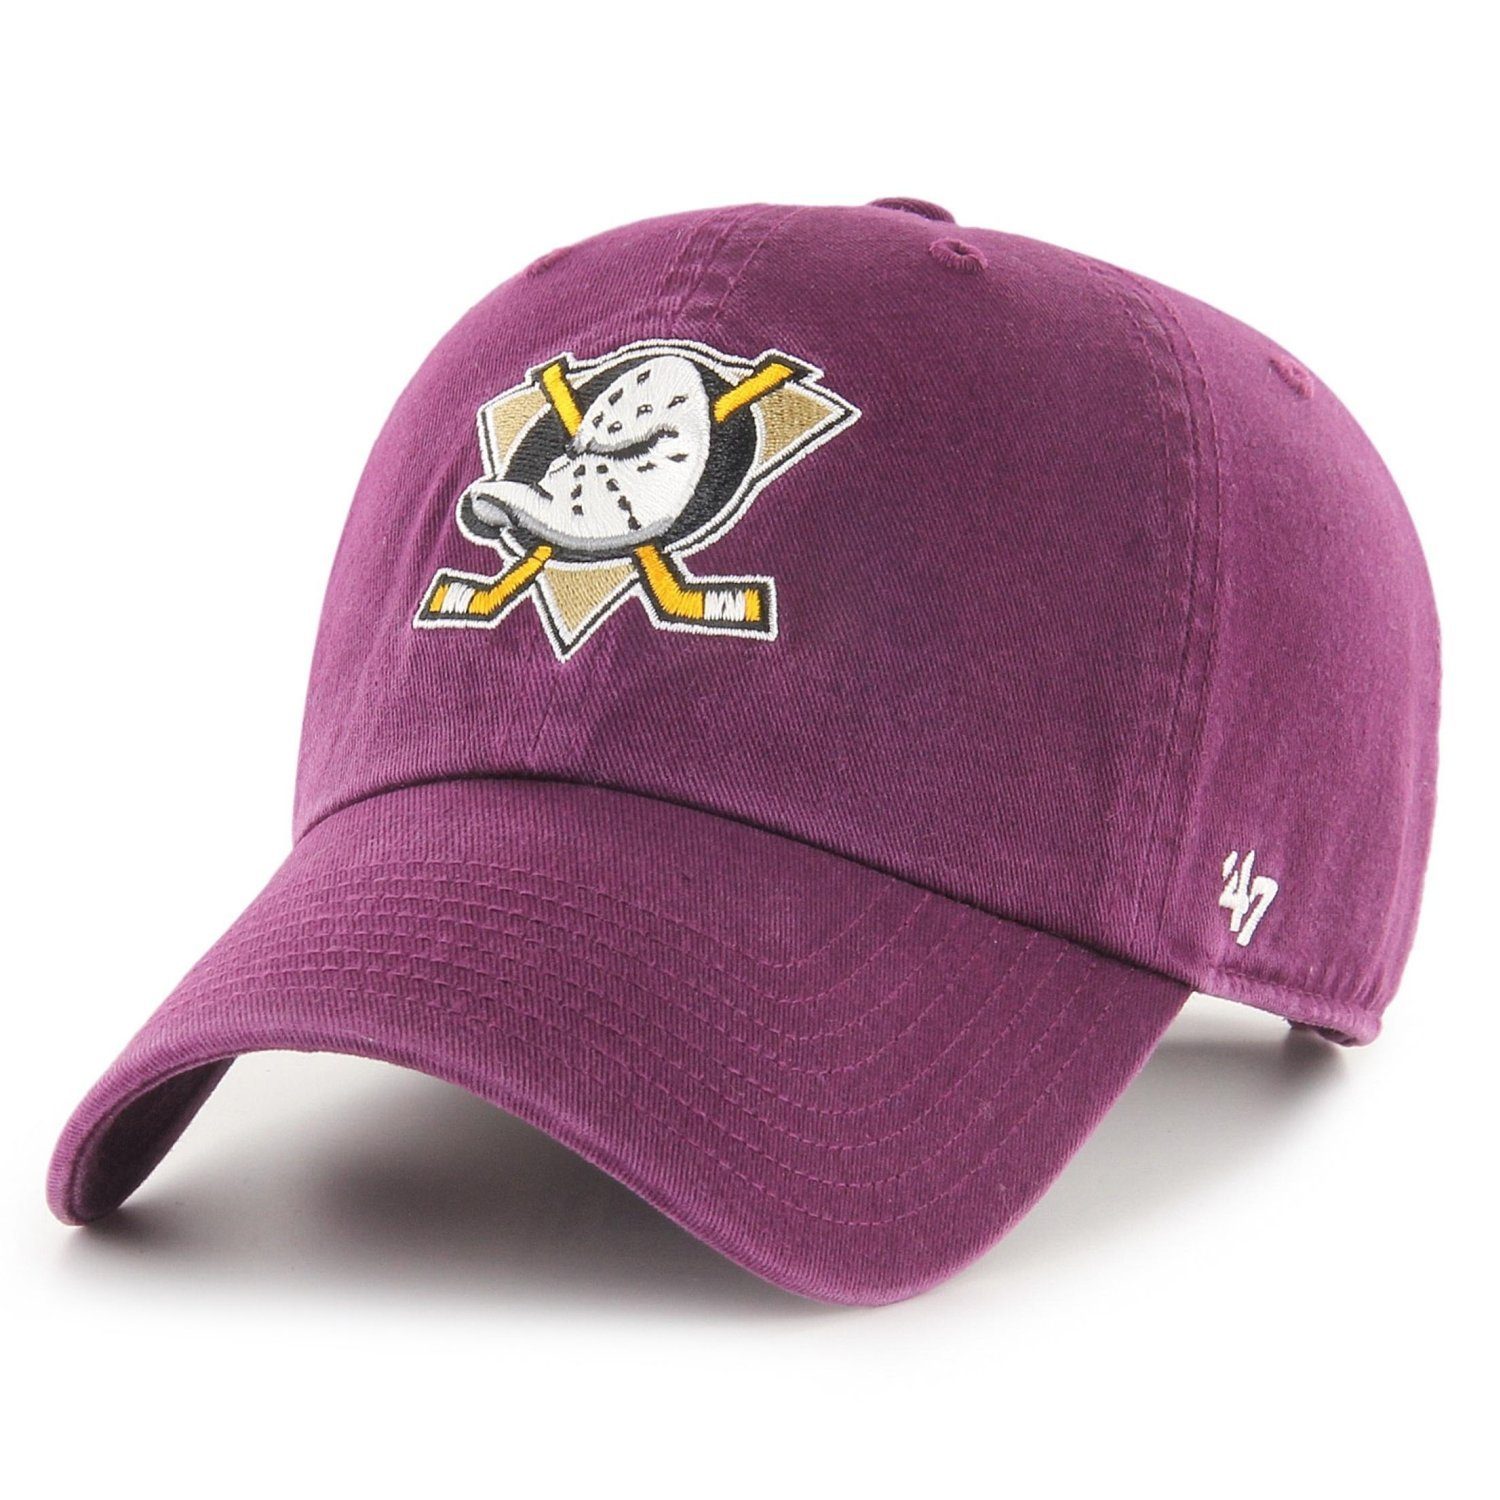 Ducks Brand CLEAN Baseball UP Anaheim '47 Cap plum